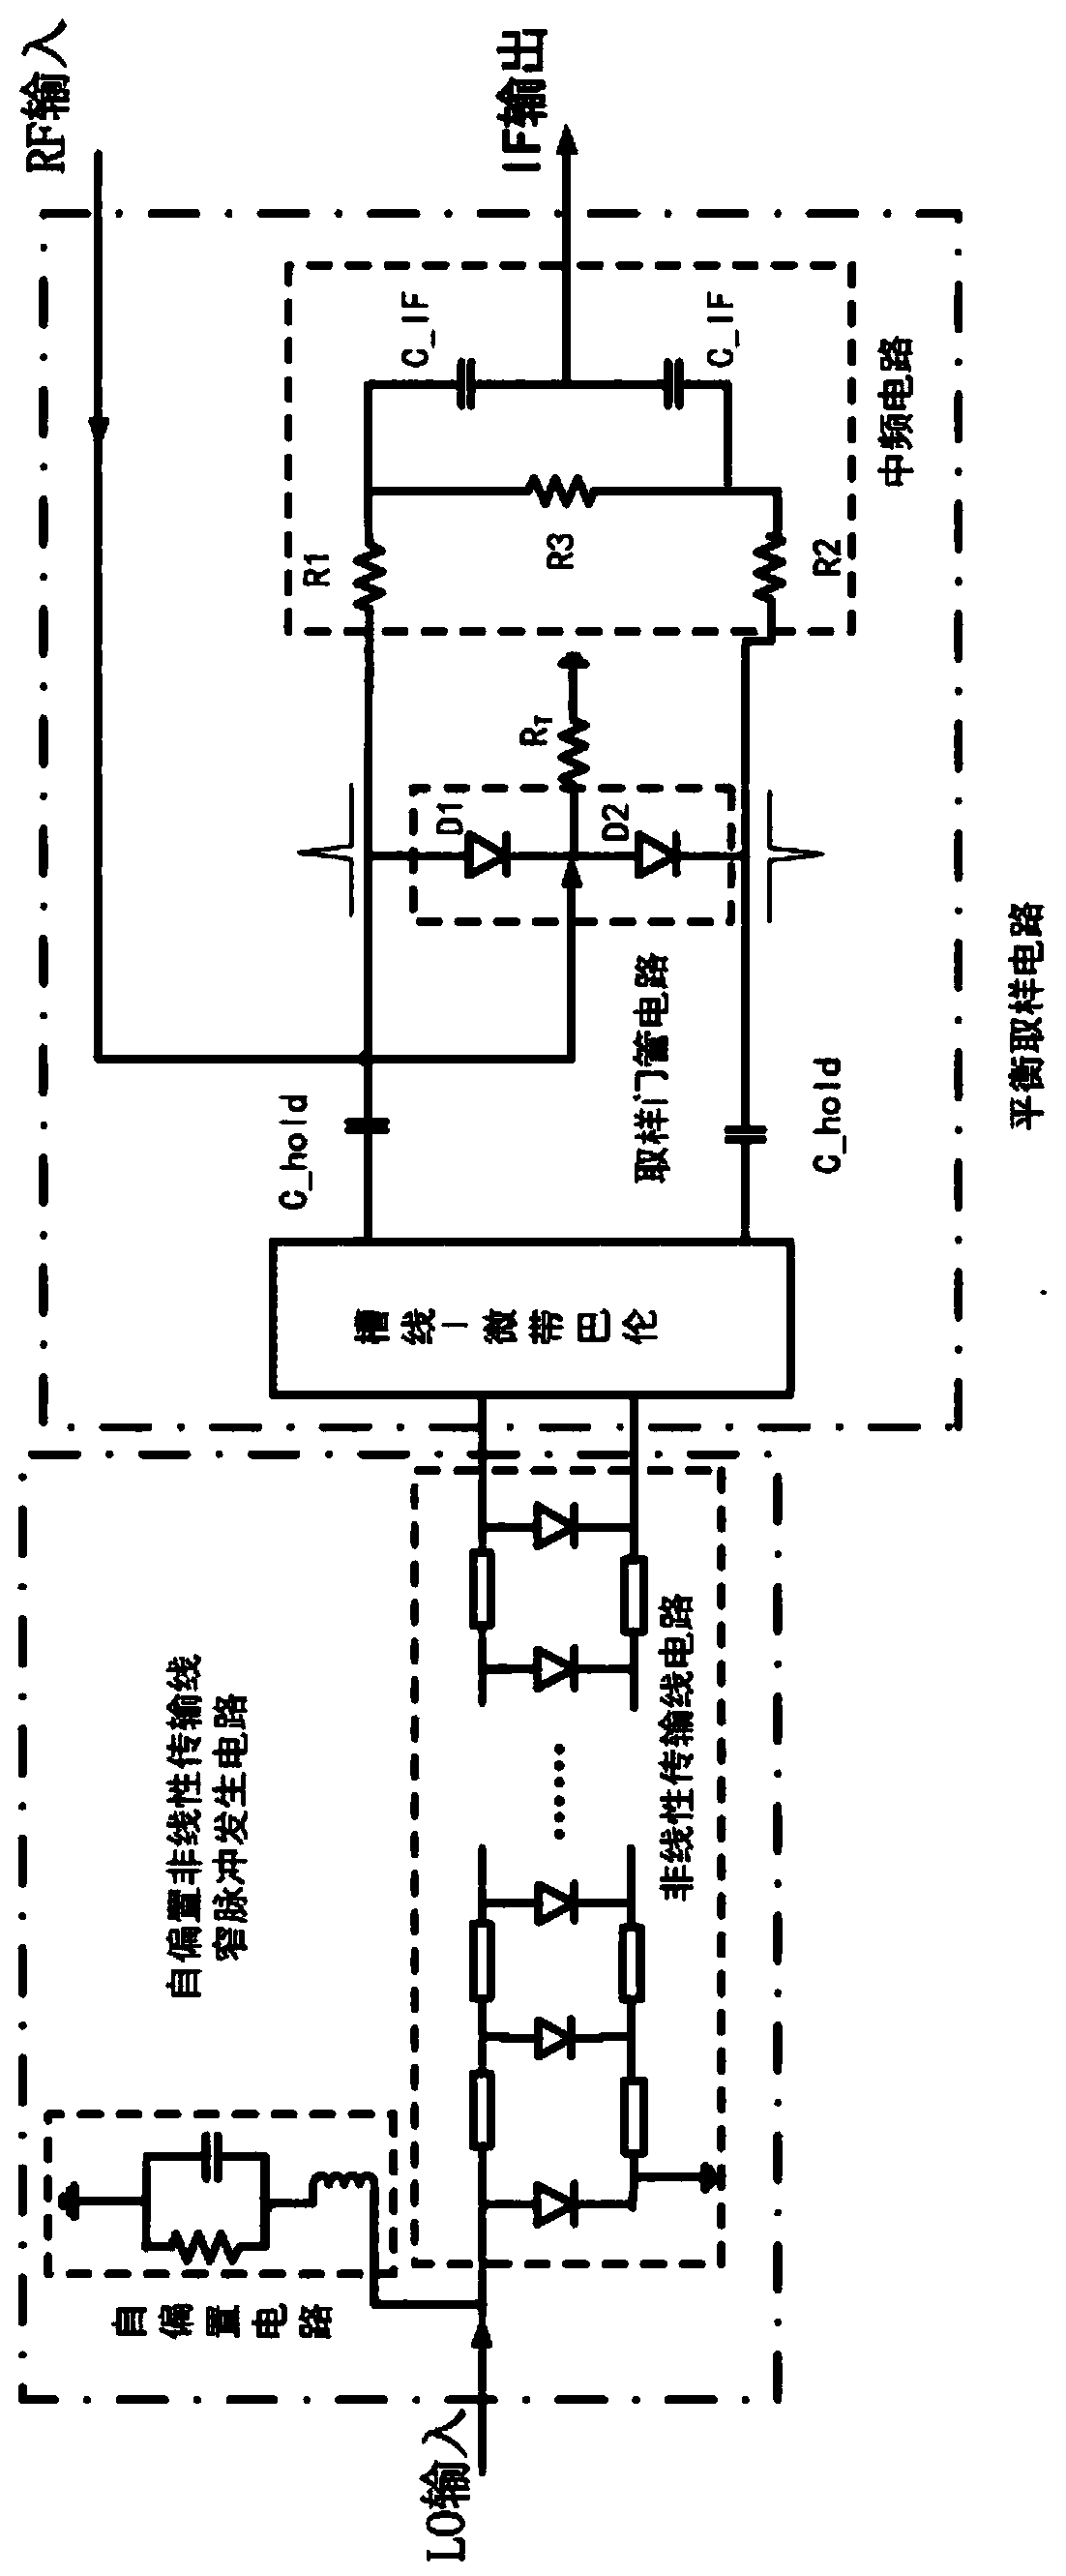 Ultra-wideband microwave sampling circuit and sampling method based on nonlinear transmission line